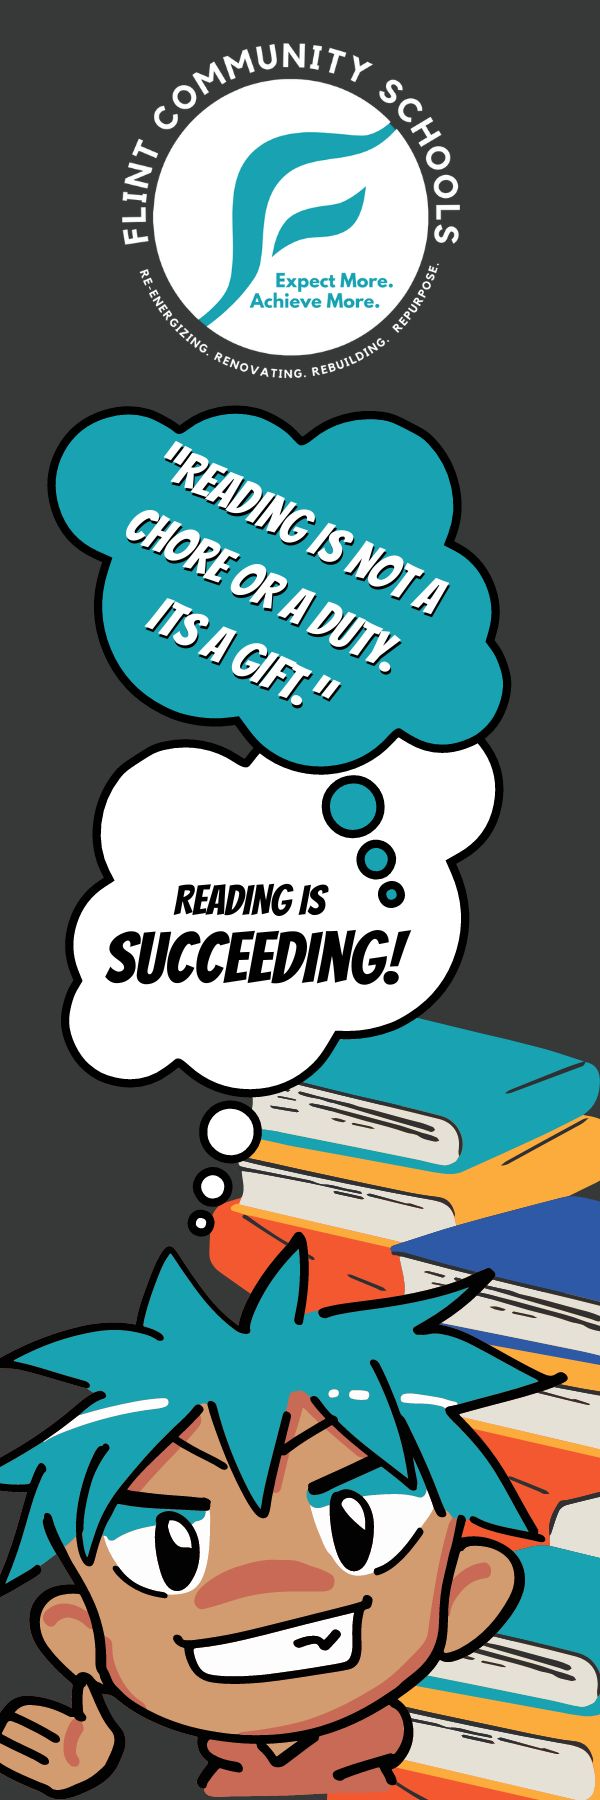 Flint Community Schools Literacy Initiative Bookmark